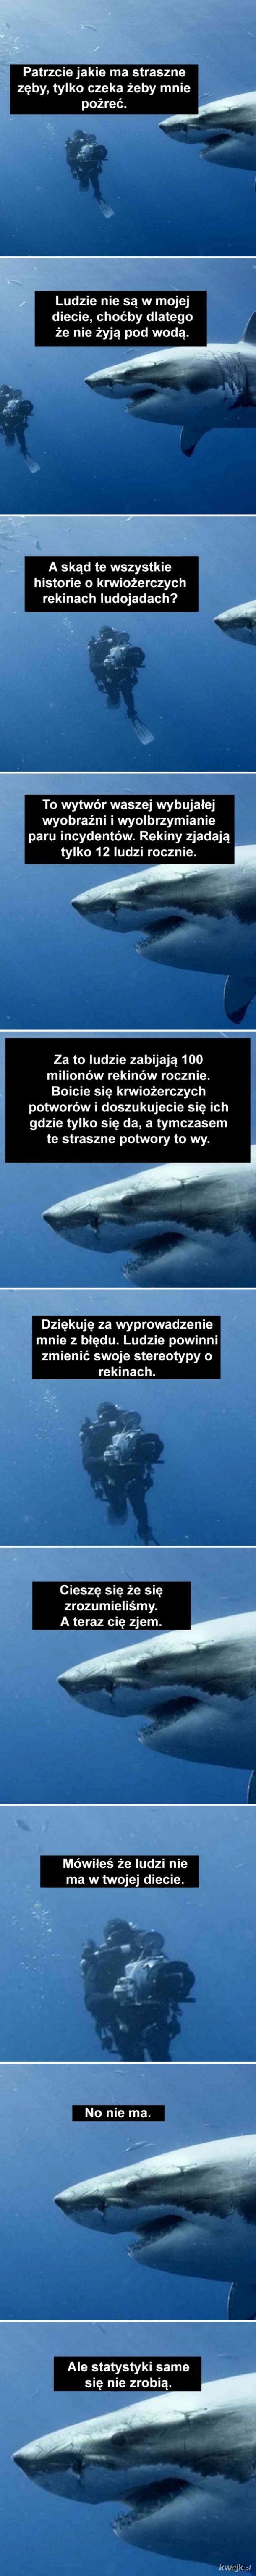 Prawda o rekinach